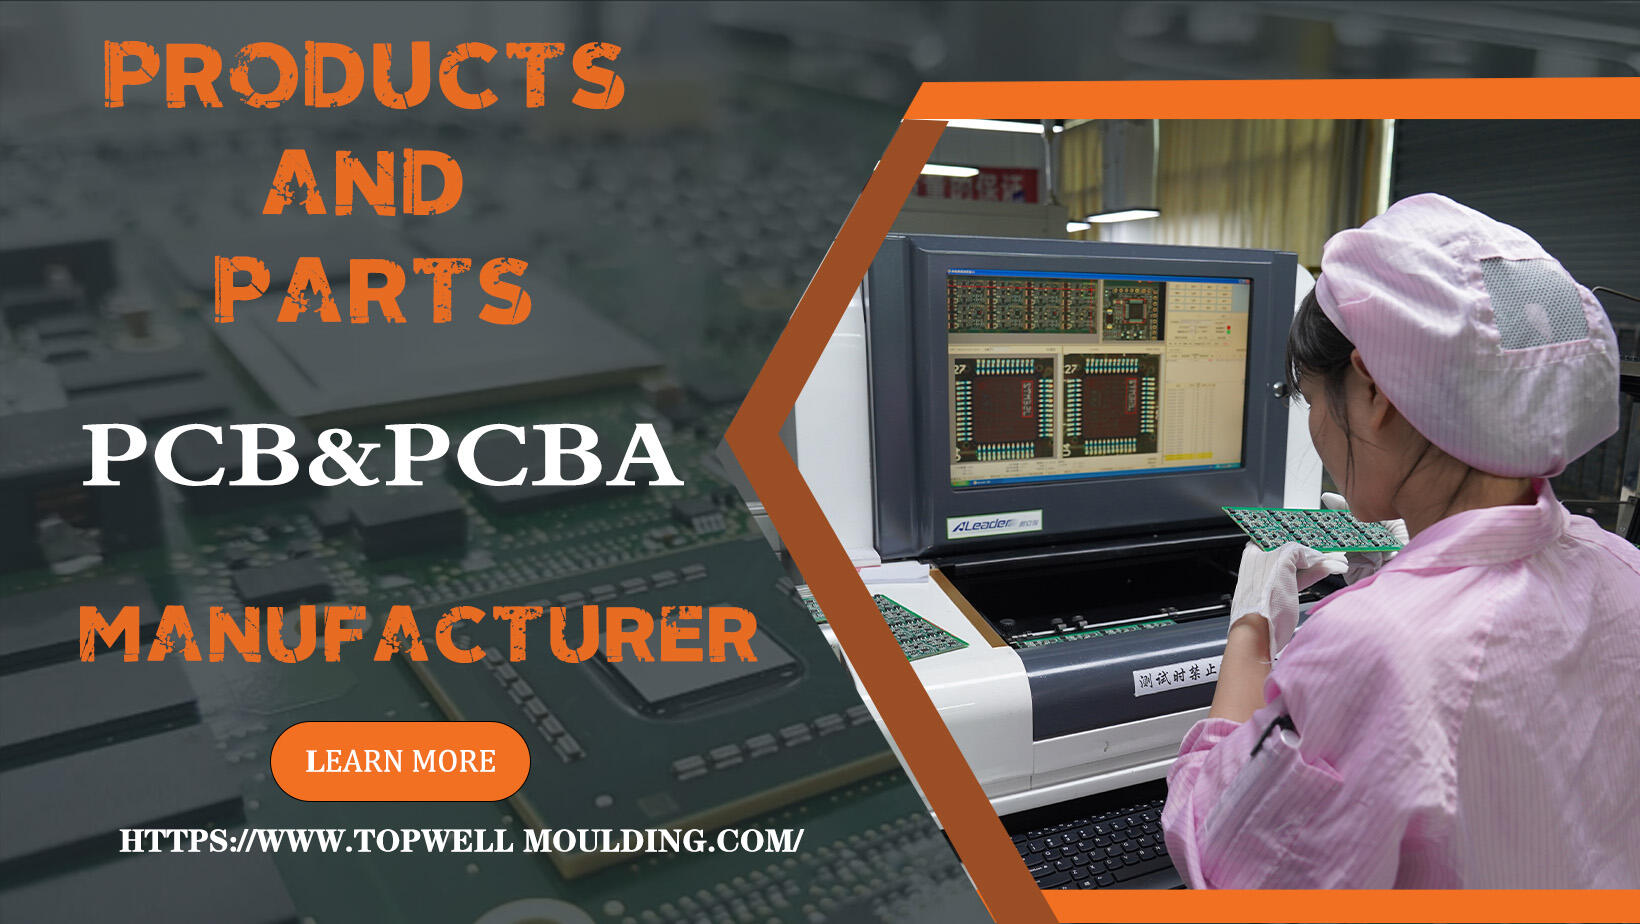 PCBA;PCB;Проектирование печатных плат (печатных плат), PCBA (сборка печатных плат) и OEM